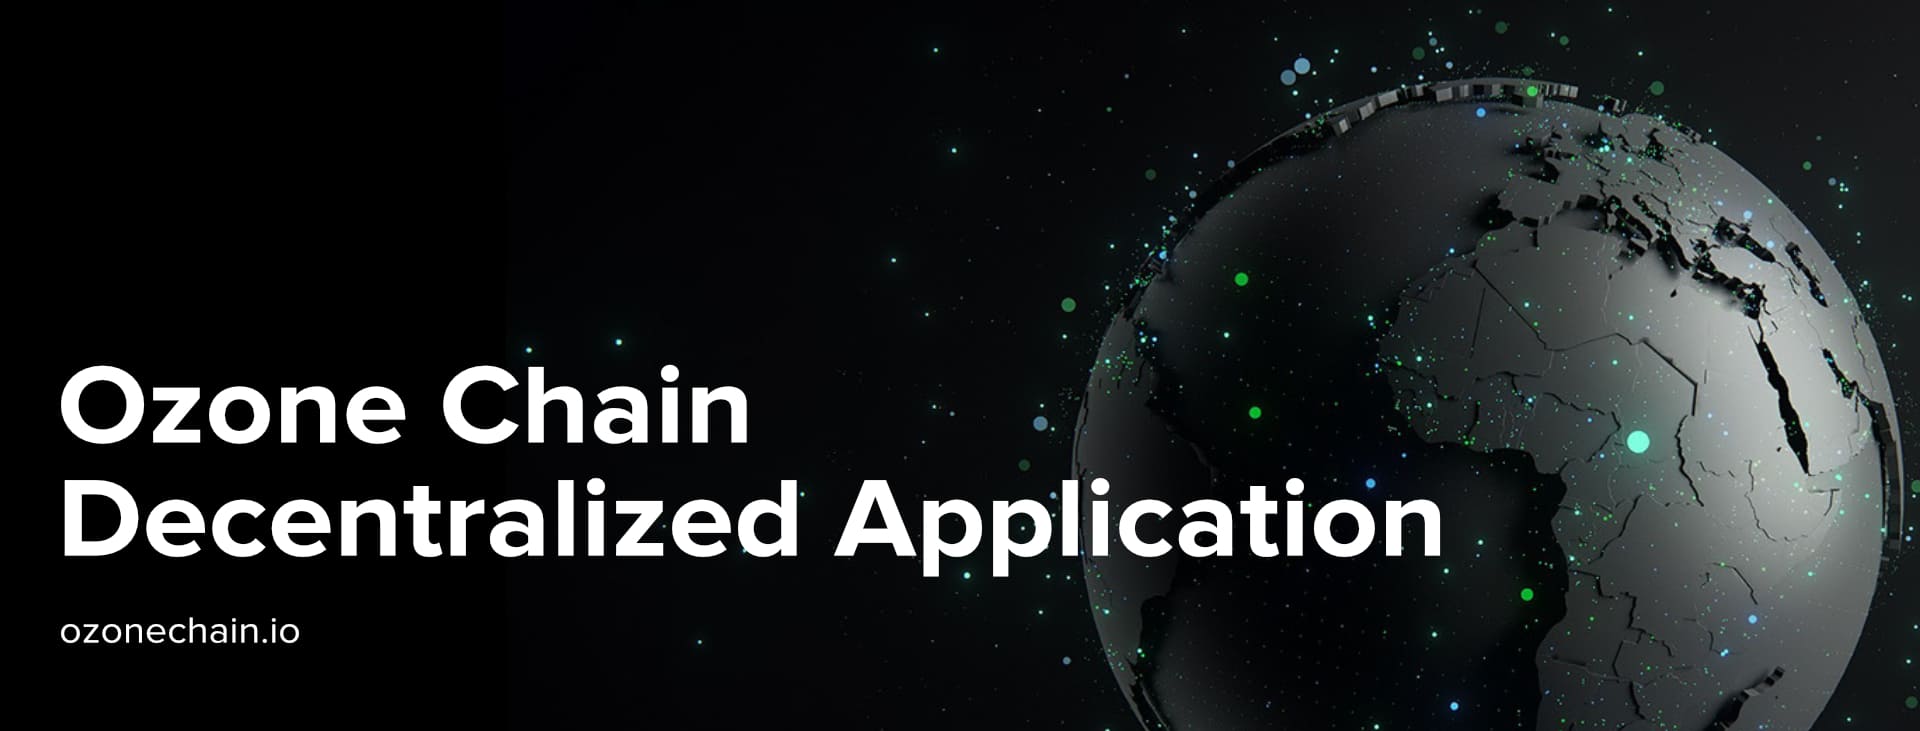 ozone-chain-decentralized application